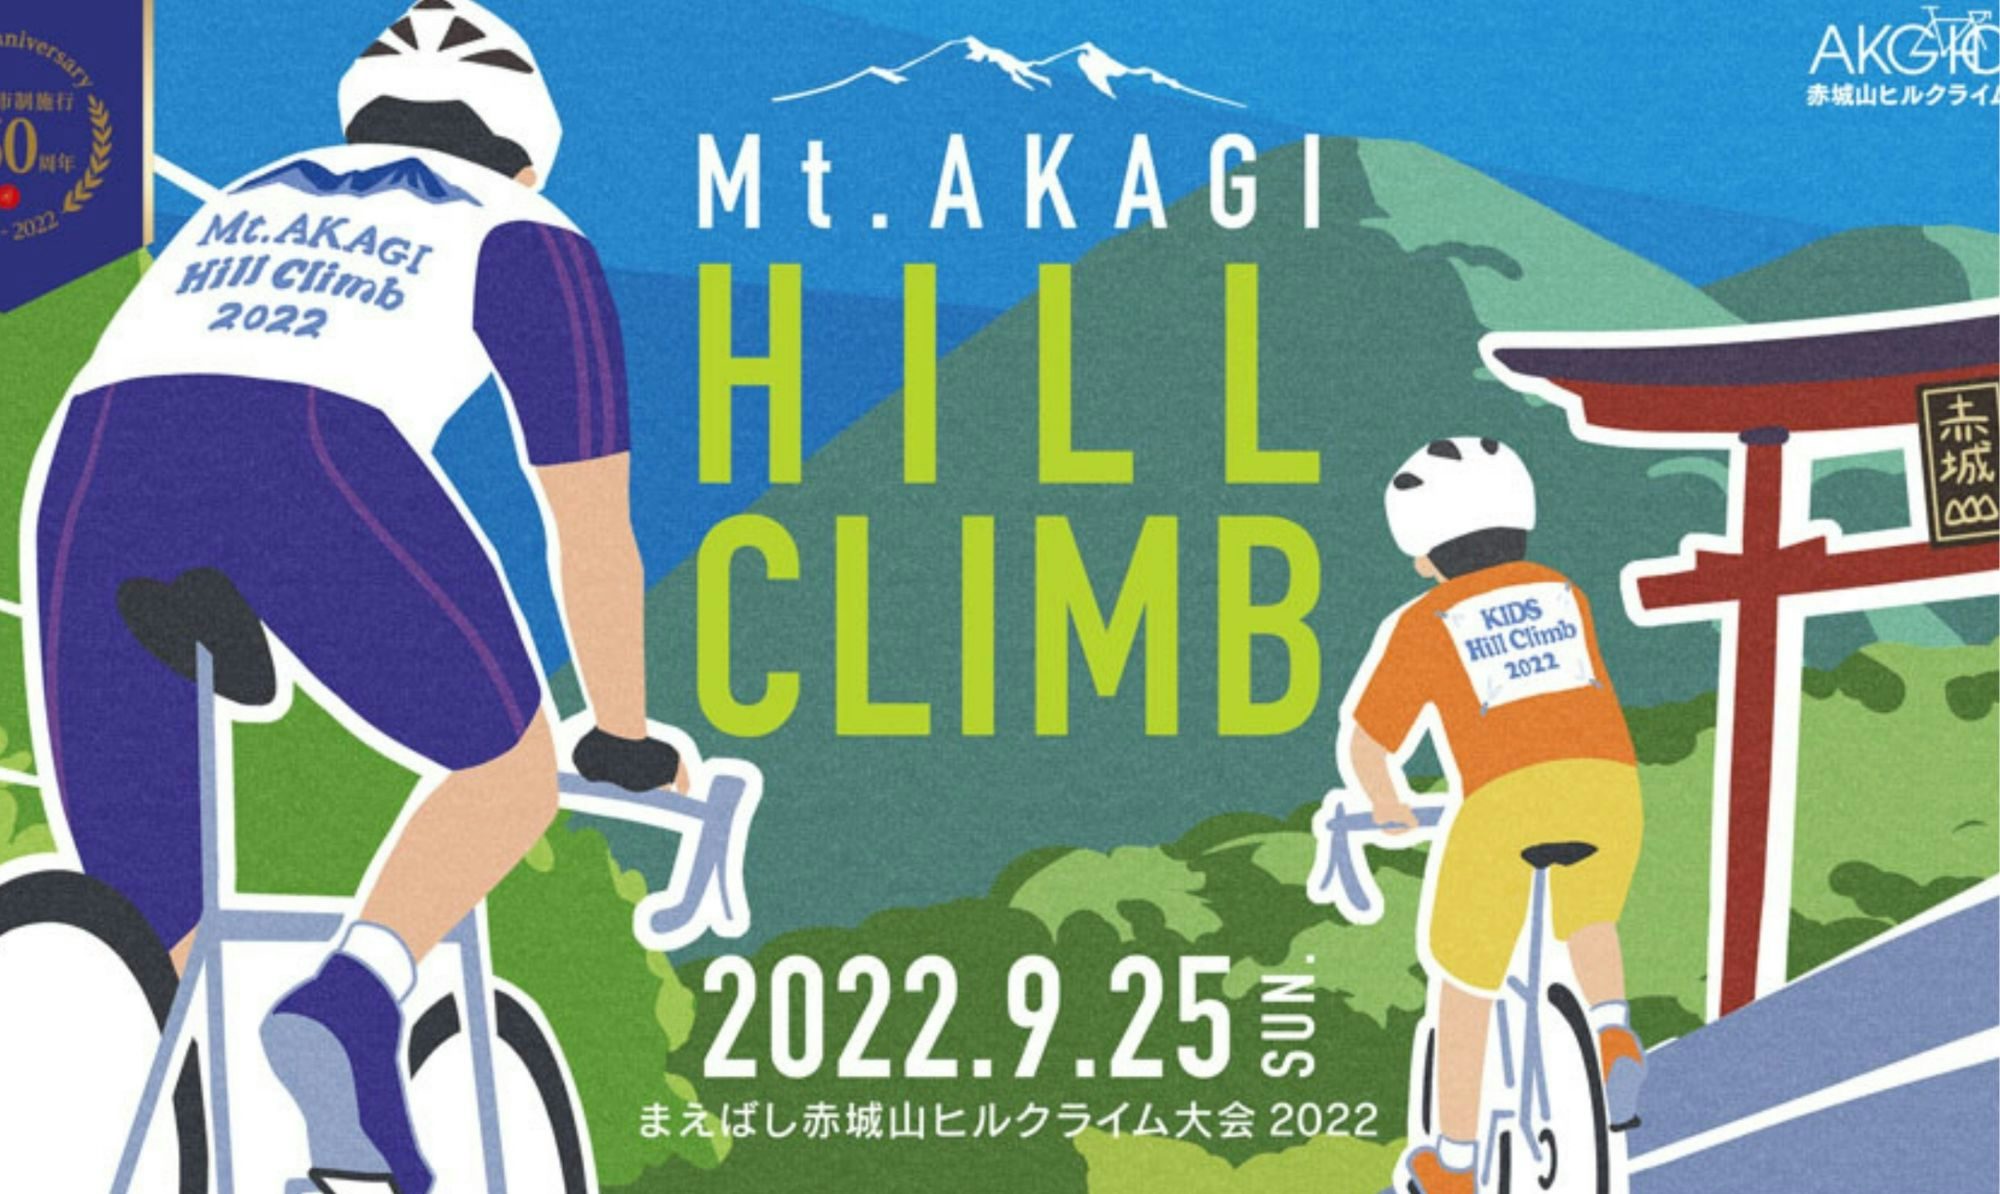 Mt Akagi Hill Climb Tour